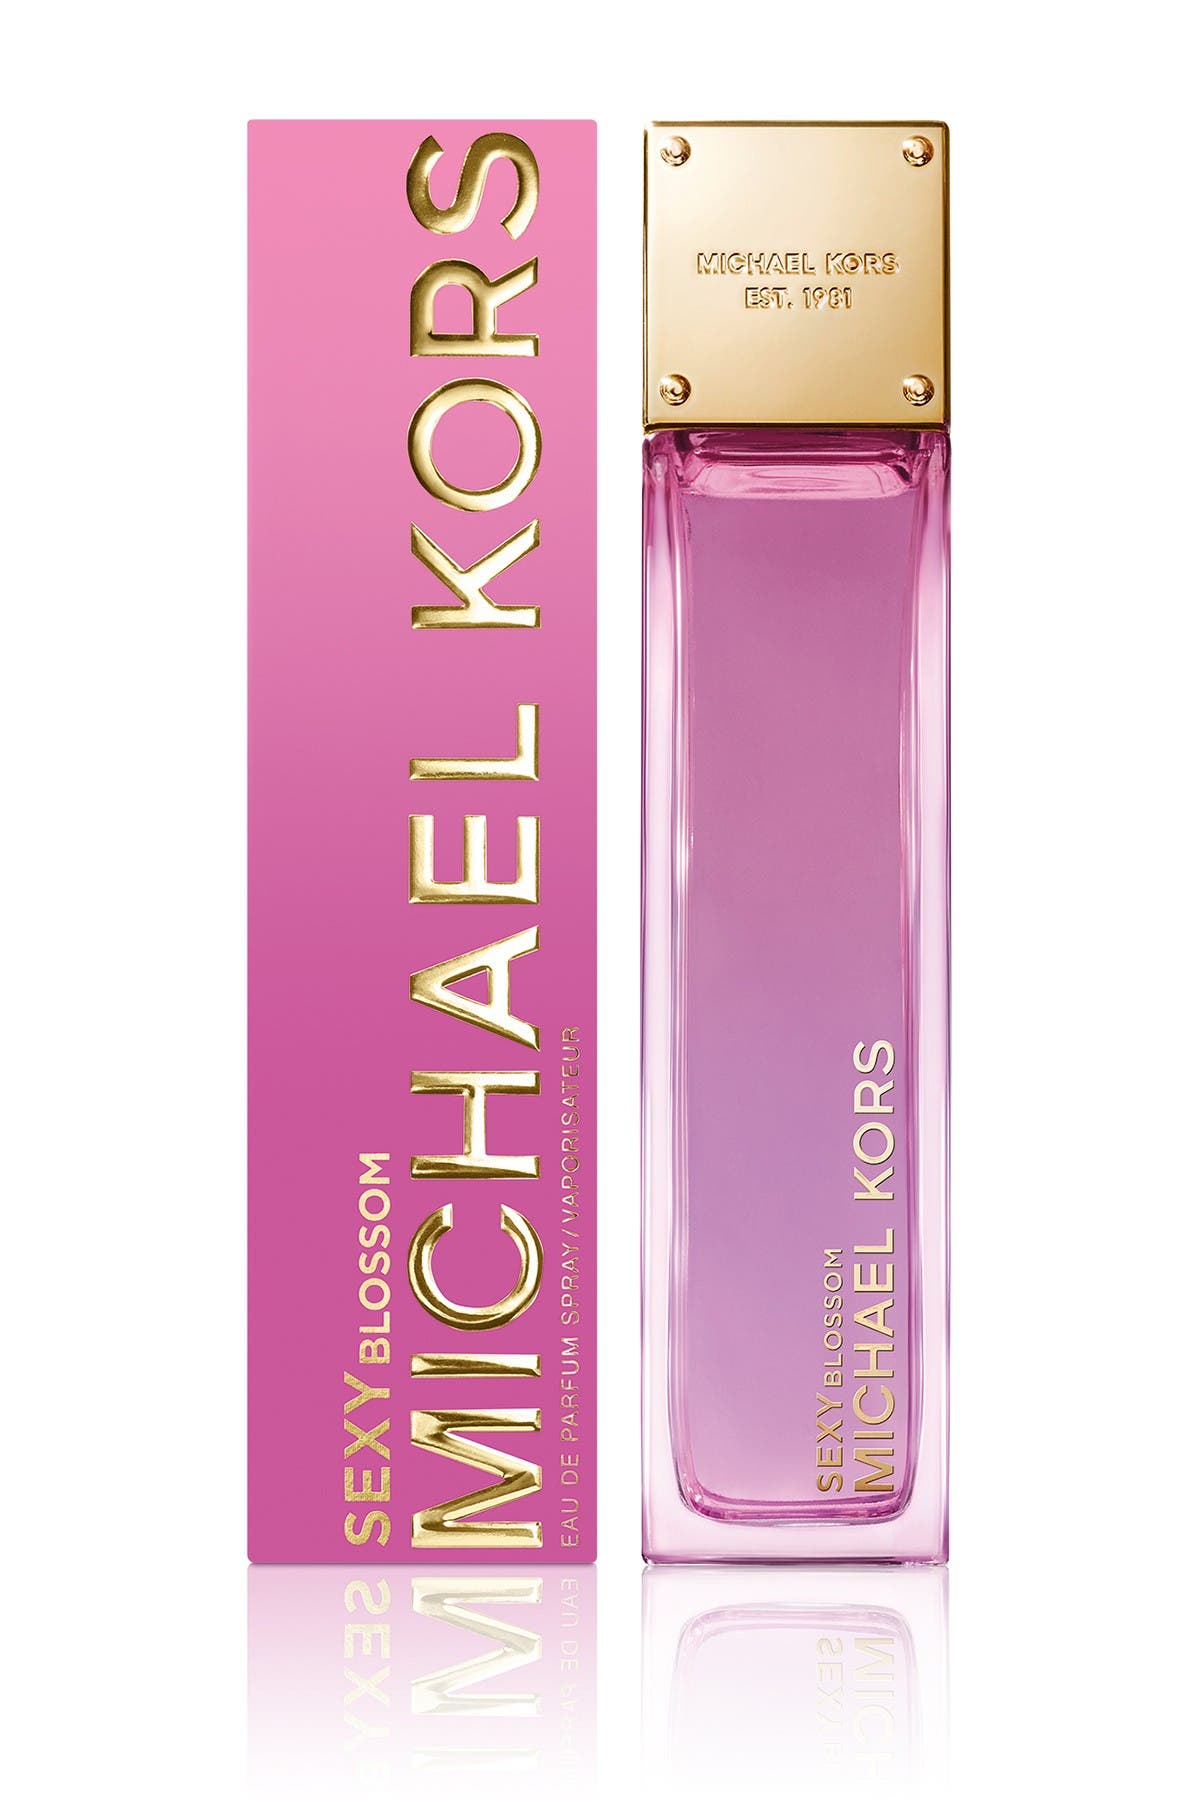 michael kors perfume purple bottle